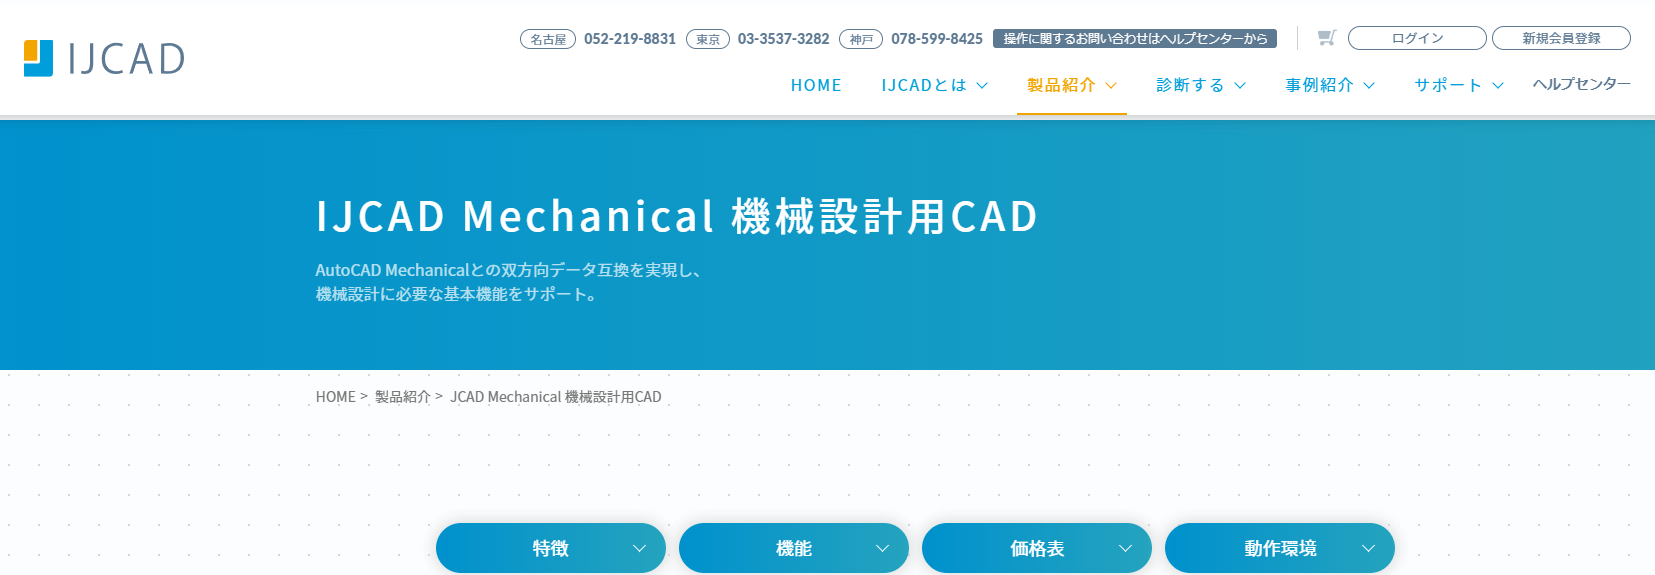 IJCAD Mechanical 機械設計用CAD